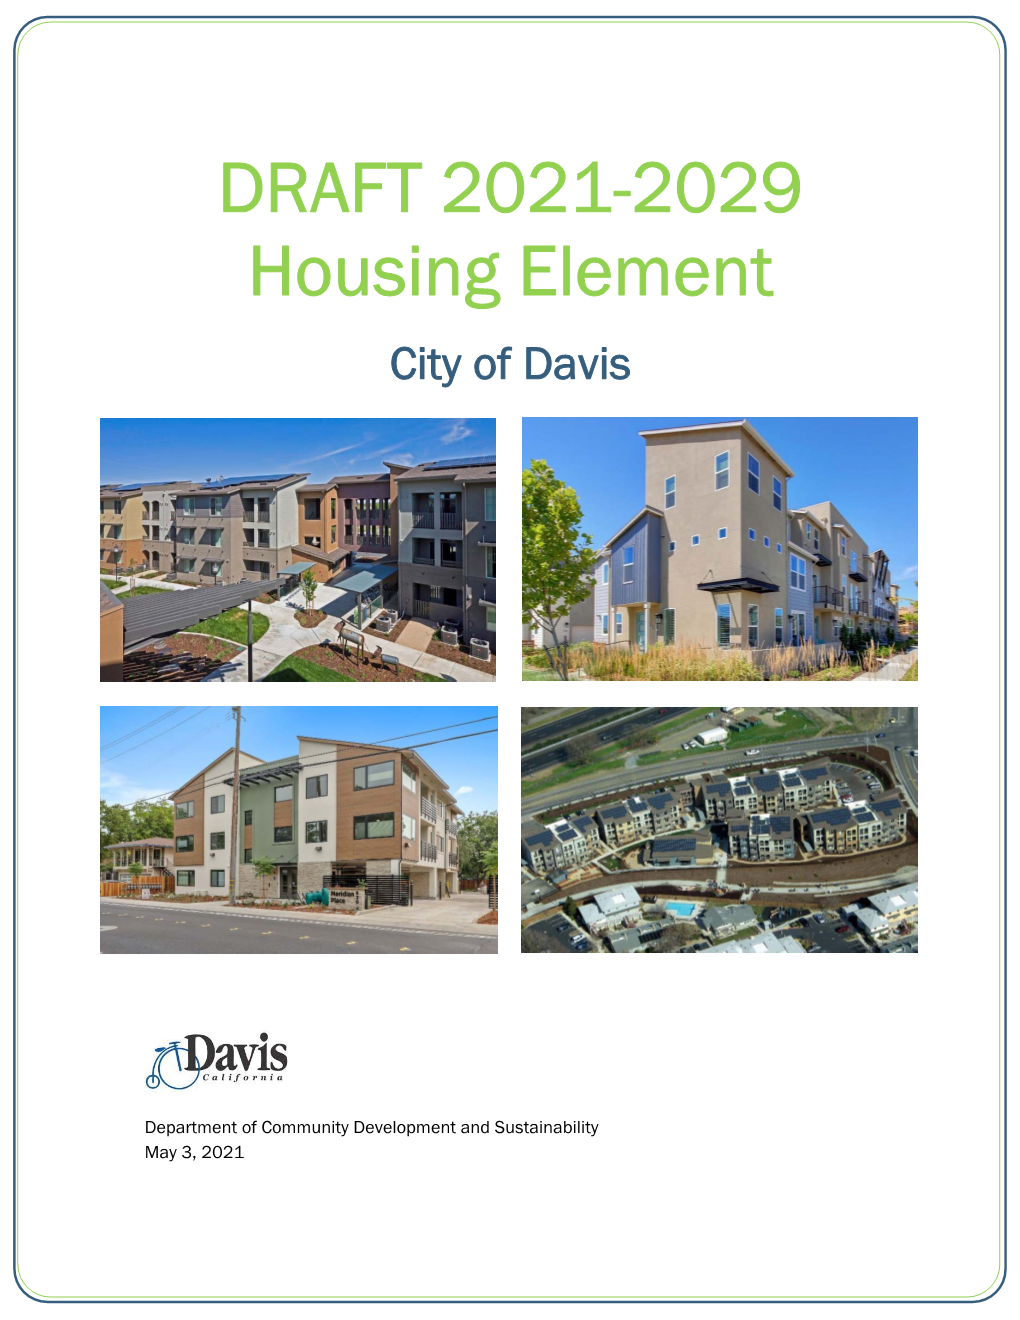 DRAFT 2021-2029 Housing Element